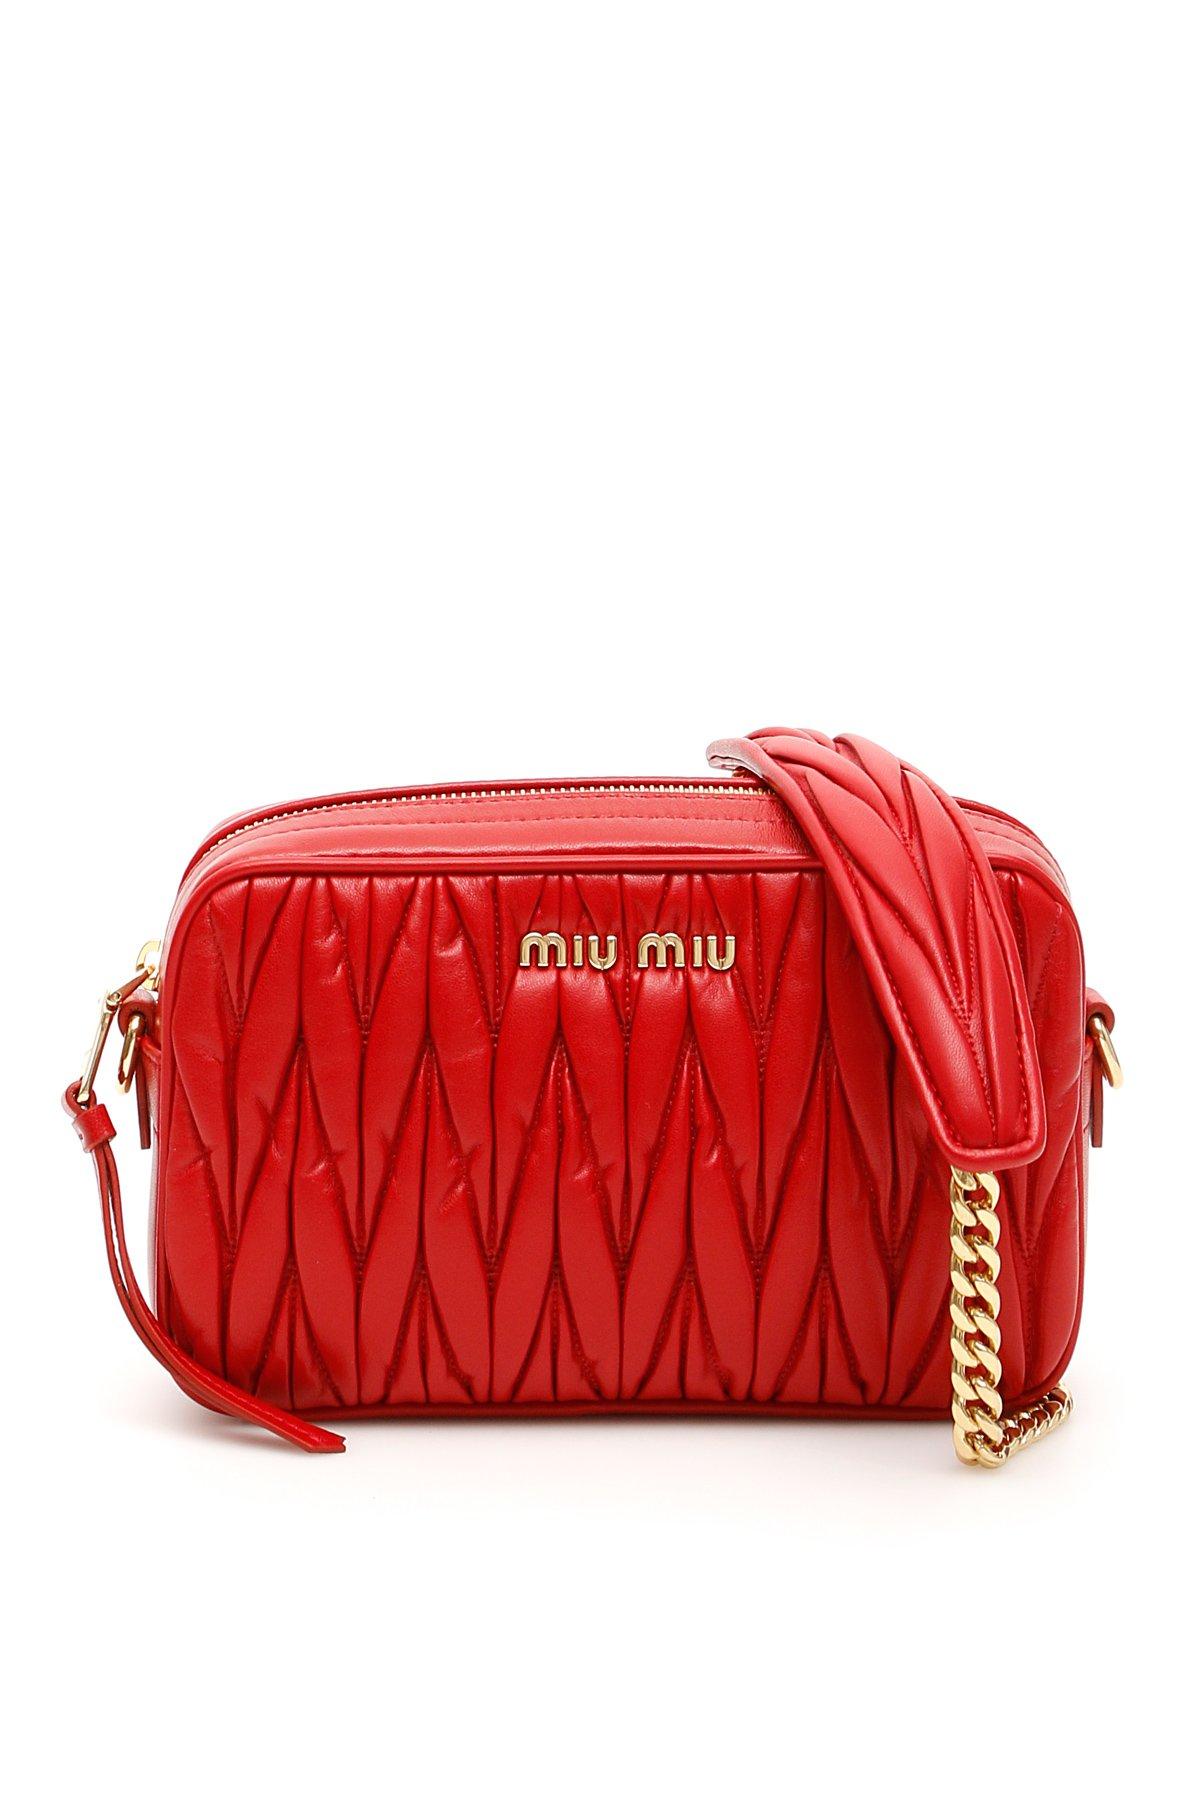 Miu Miu Leather Matelassé Logo Shoulder Bag in Red - Save 10% - Lyst